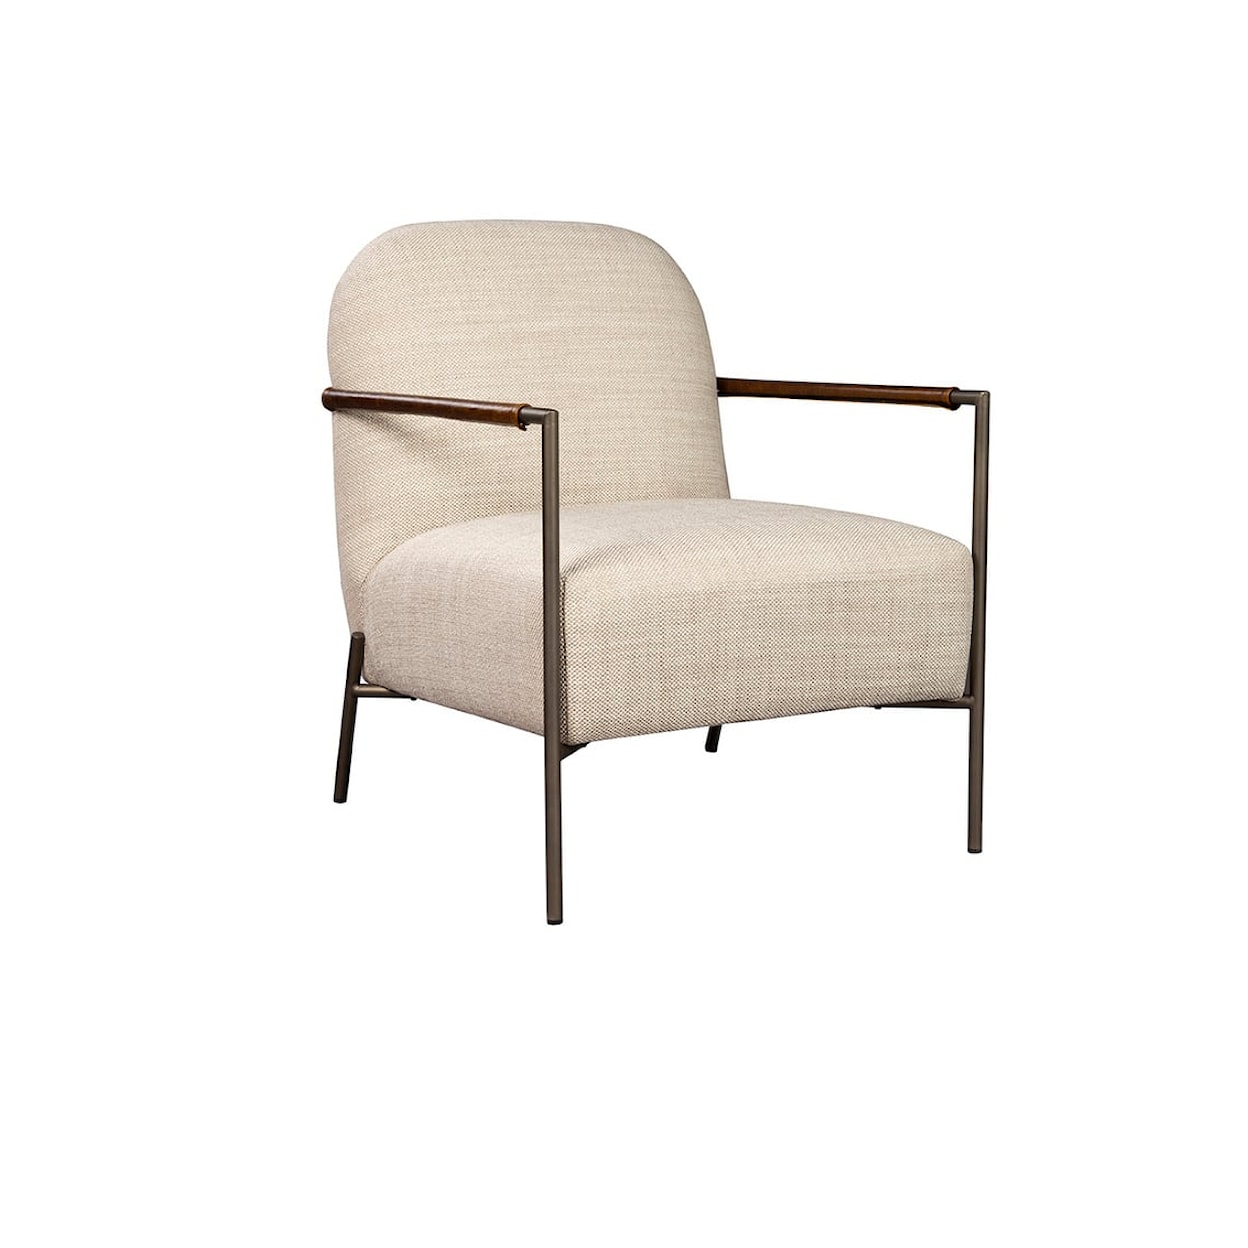 Furniture Classics Furniture Classics Phelan Occasional Chair